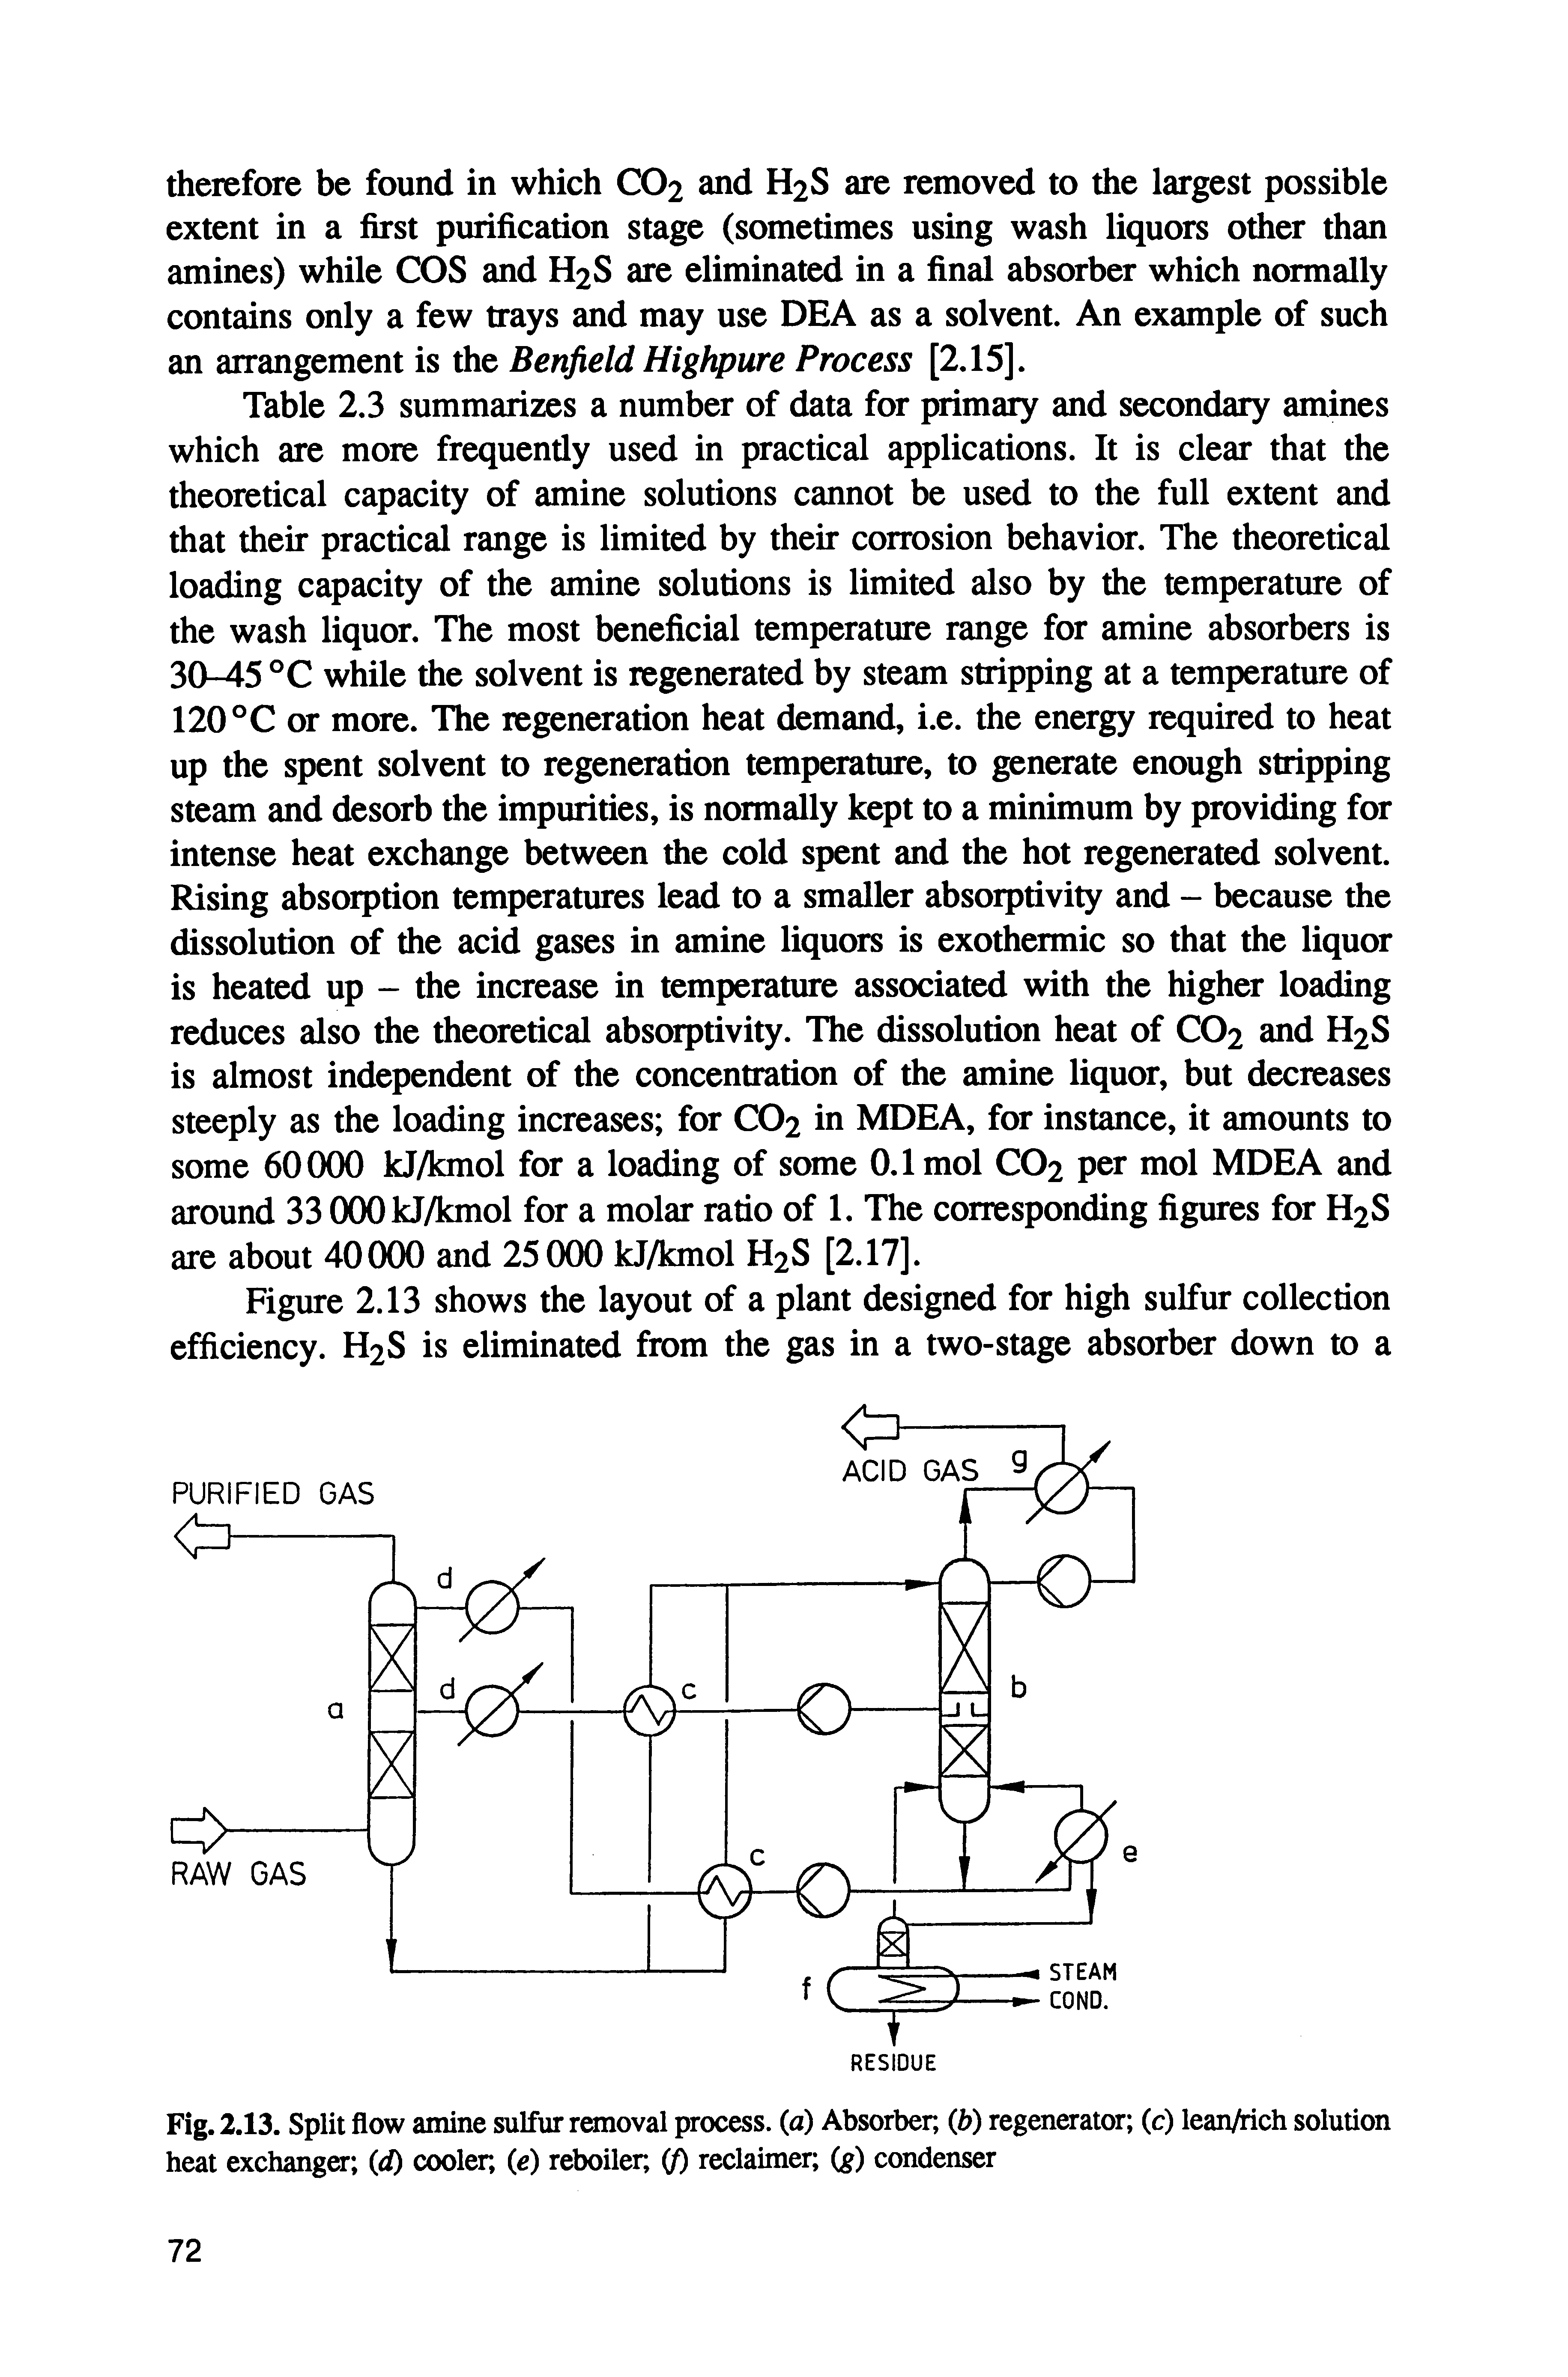 Fig. 2.13. Split flow amine sulfur ronoval process, (a) Absorber, (b) regenerator (c) lean/rich solution heat exchanger (d) cooler, (e) reboiler, (f) reclaimer, (g) condenser...